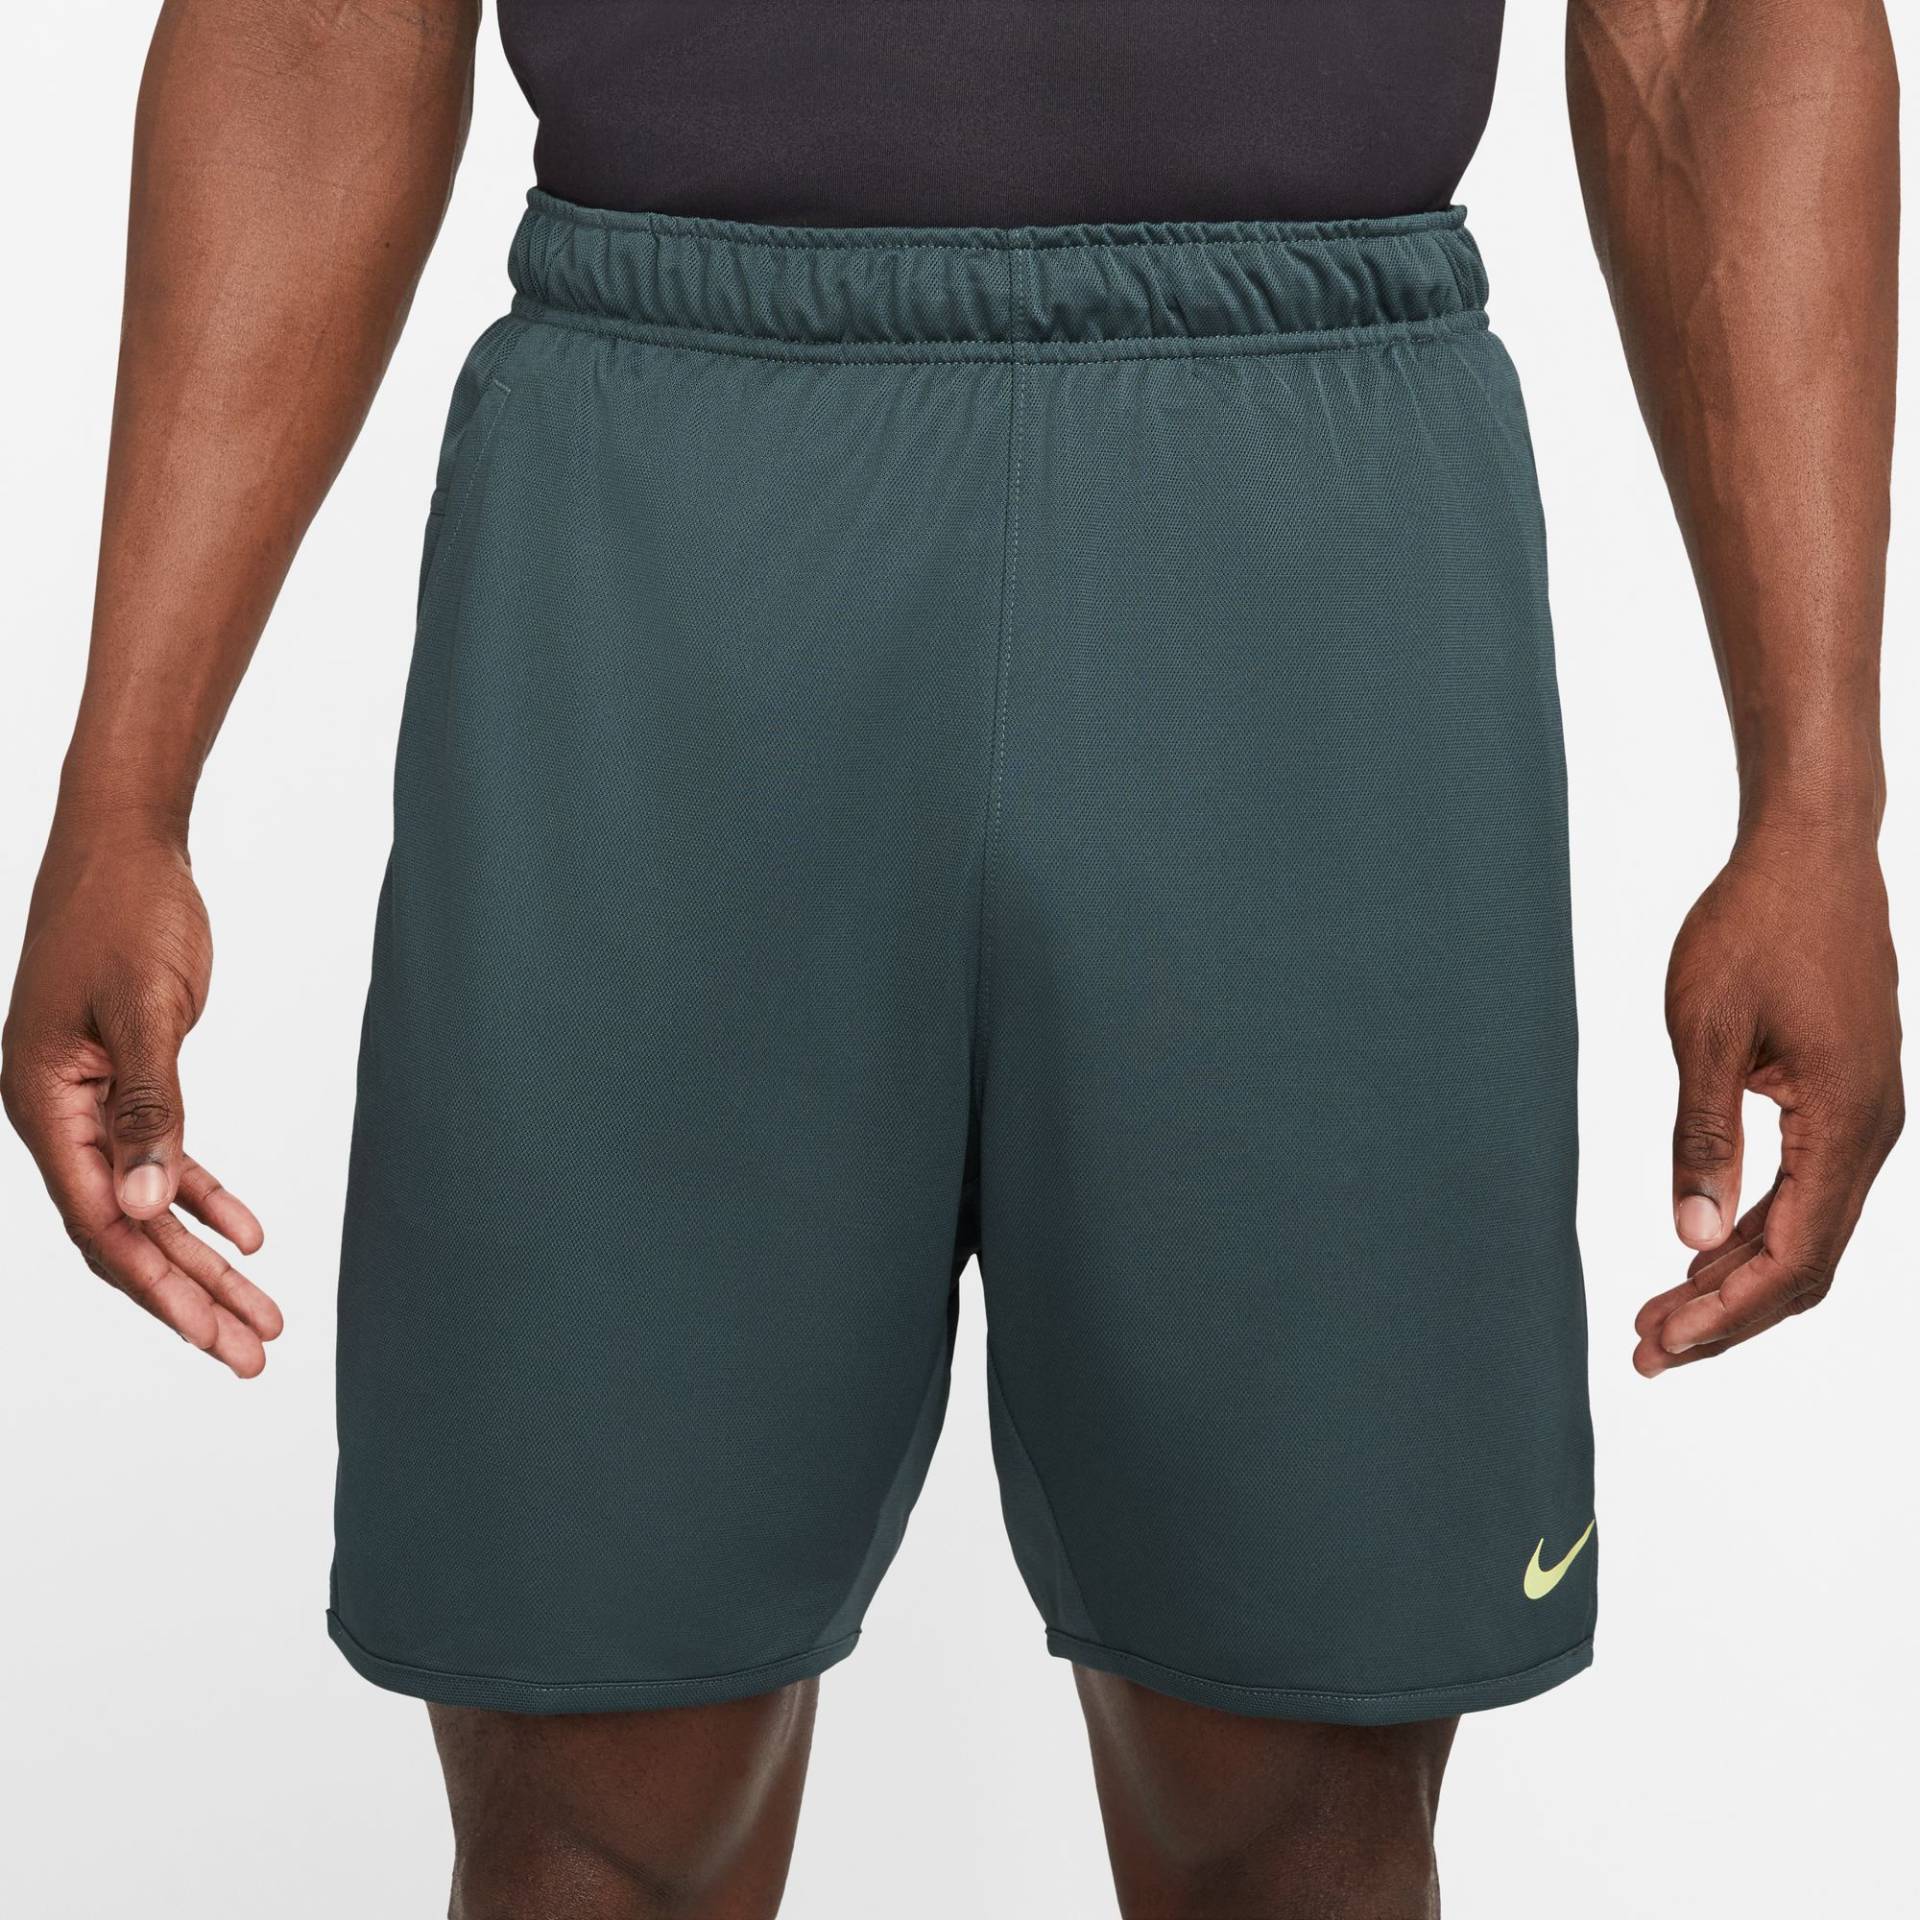 Nike Trainingsshorts »DRI-FIT TOTALITY MEN'S UNLINED KNIT SHORTS« von Nike